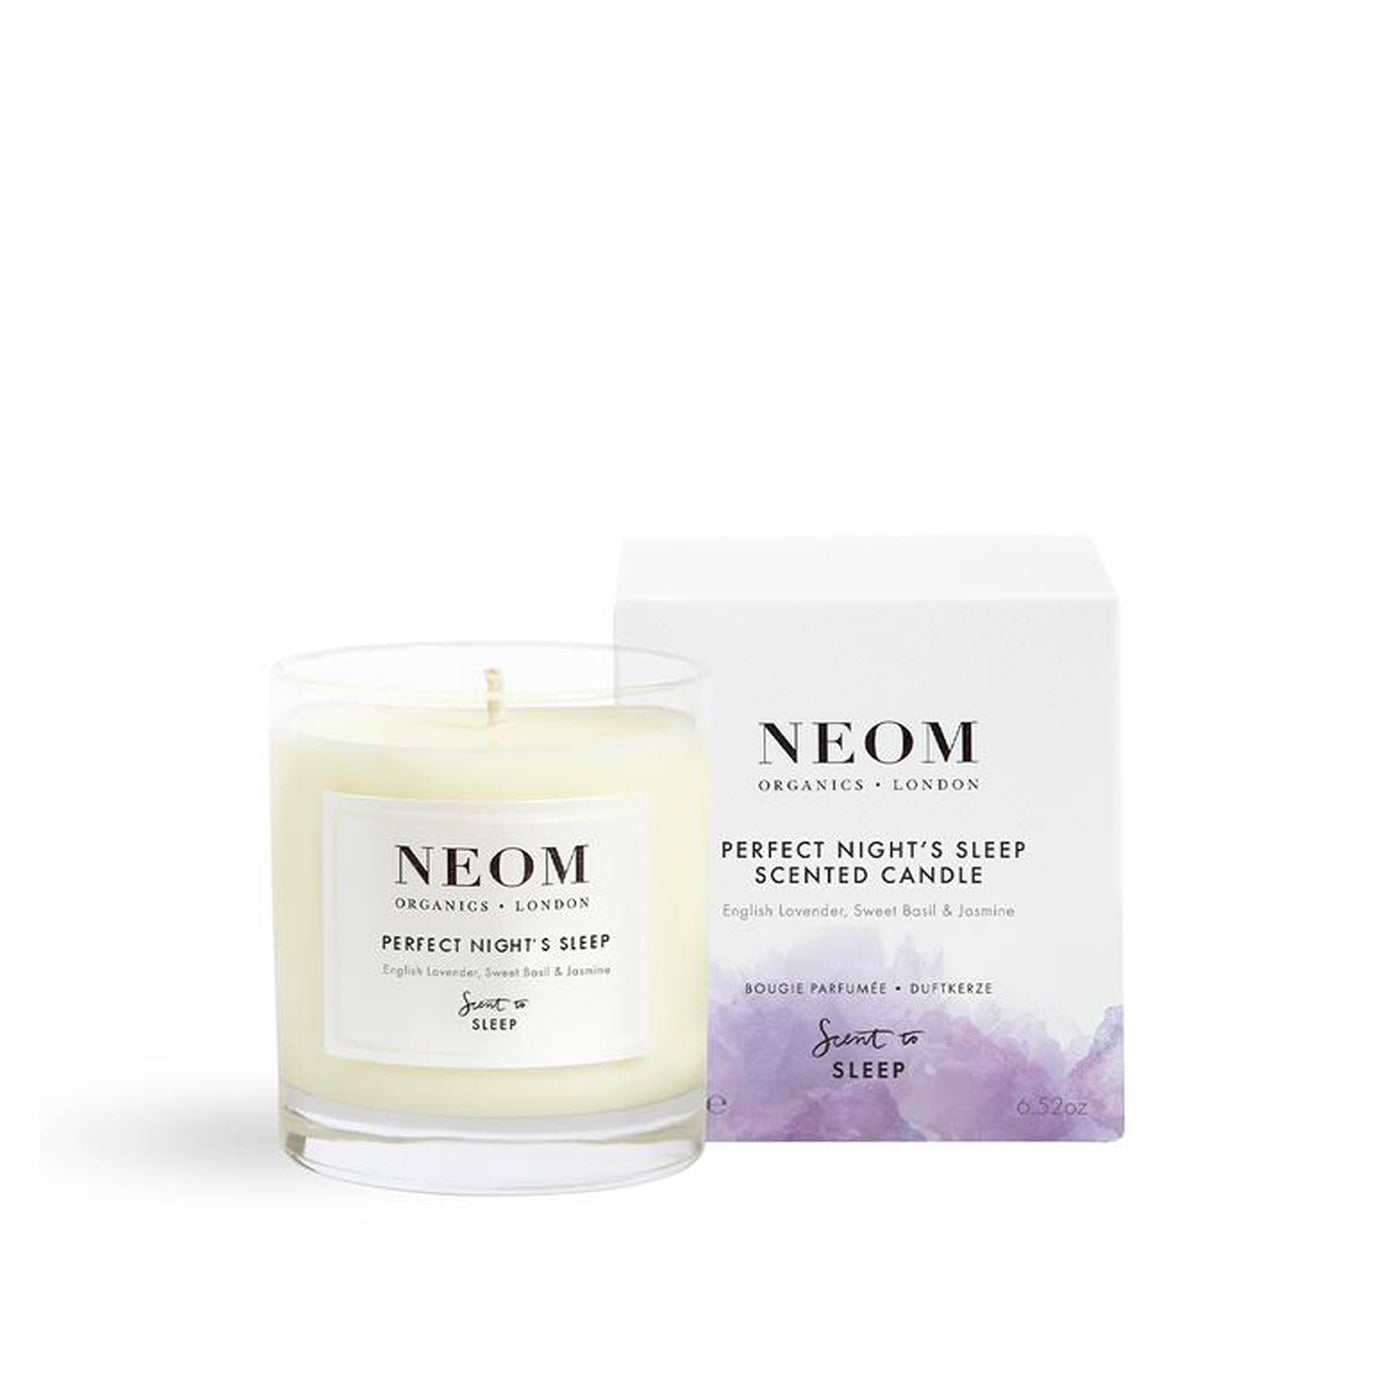 NEOM Organics - Perfect Night’s Sleep Candle 1 Wick